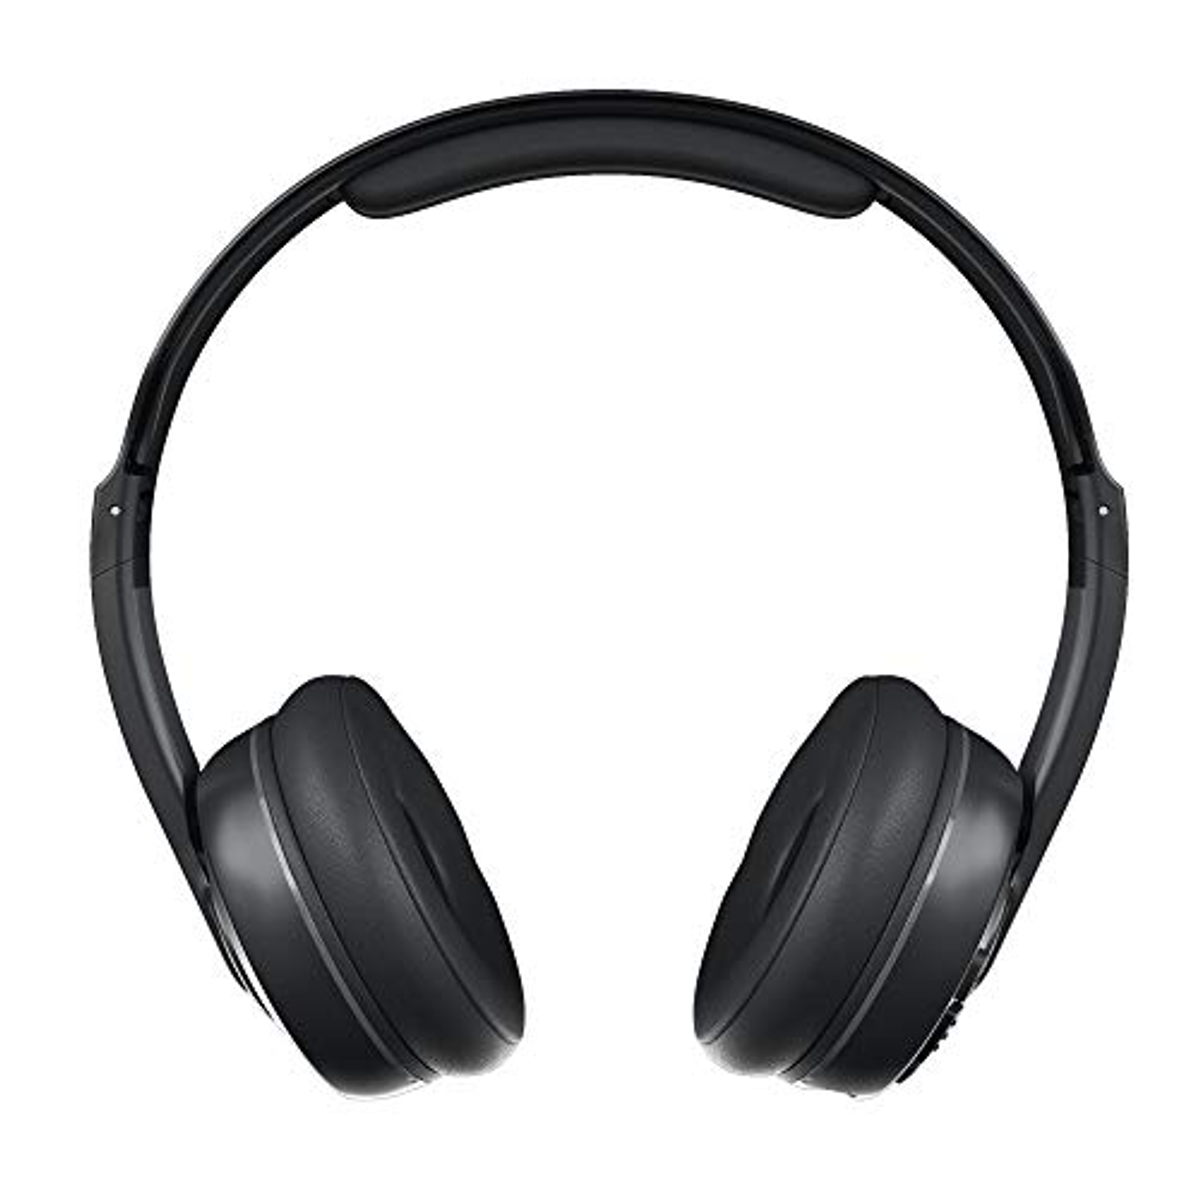 Bluetooth Schwarz SKULLCANDY S5CSW-M448, Bluetooth On-ear kopfhörer